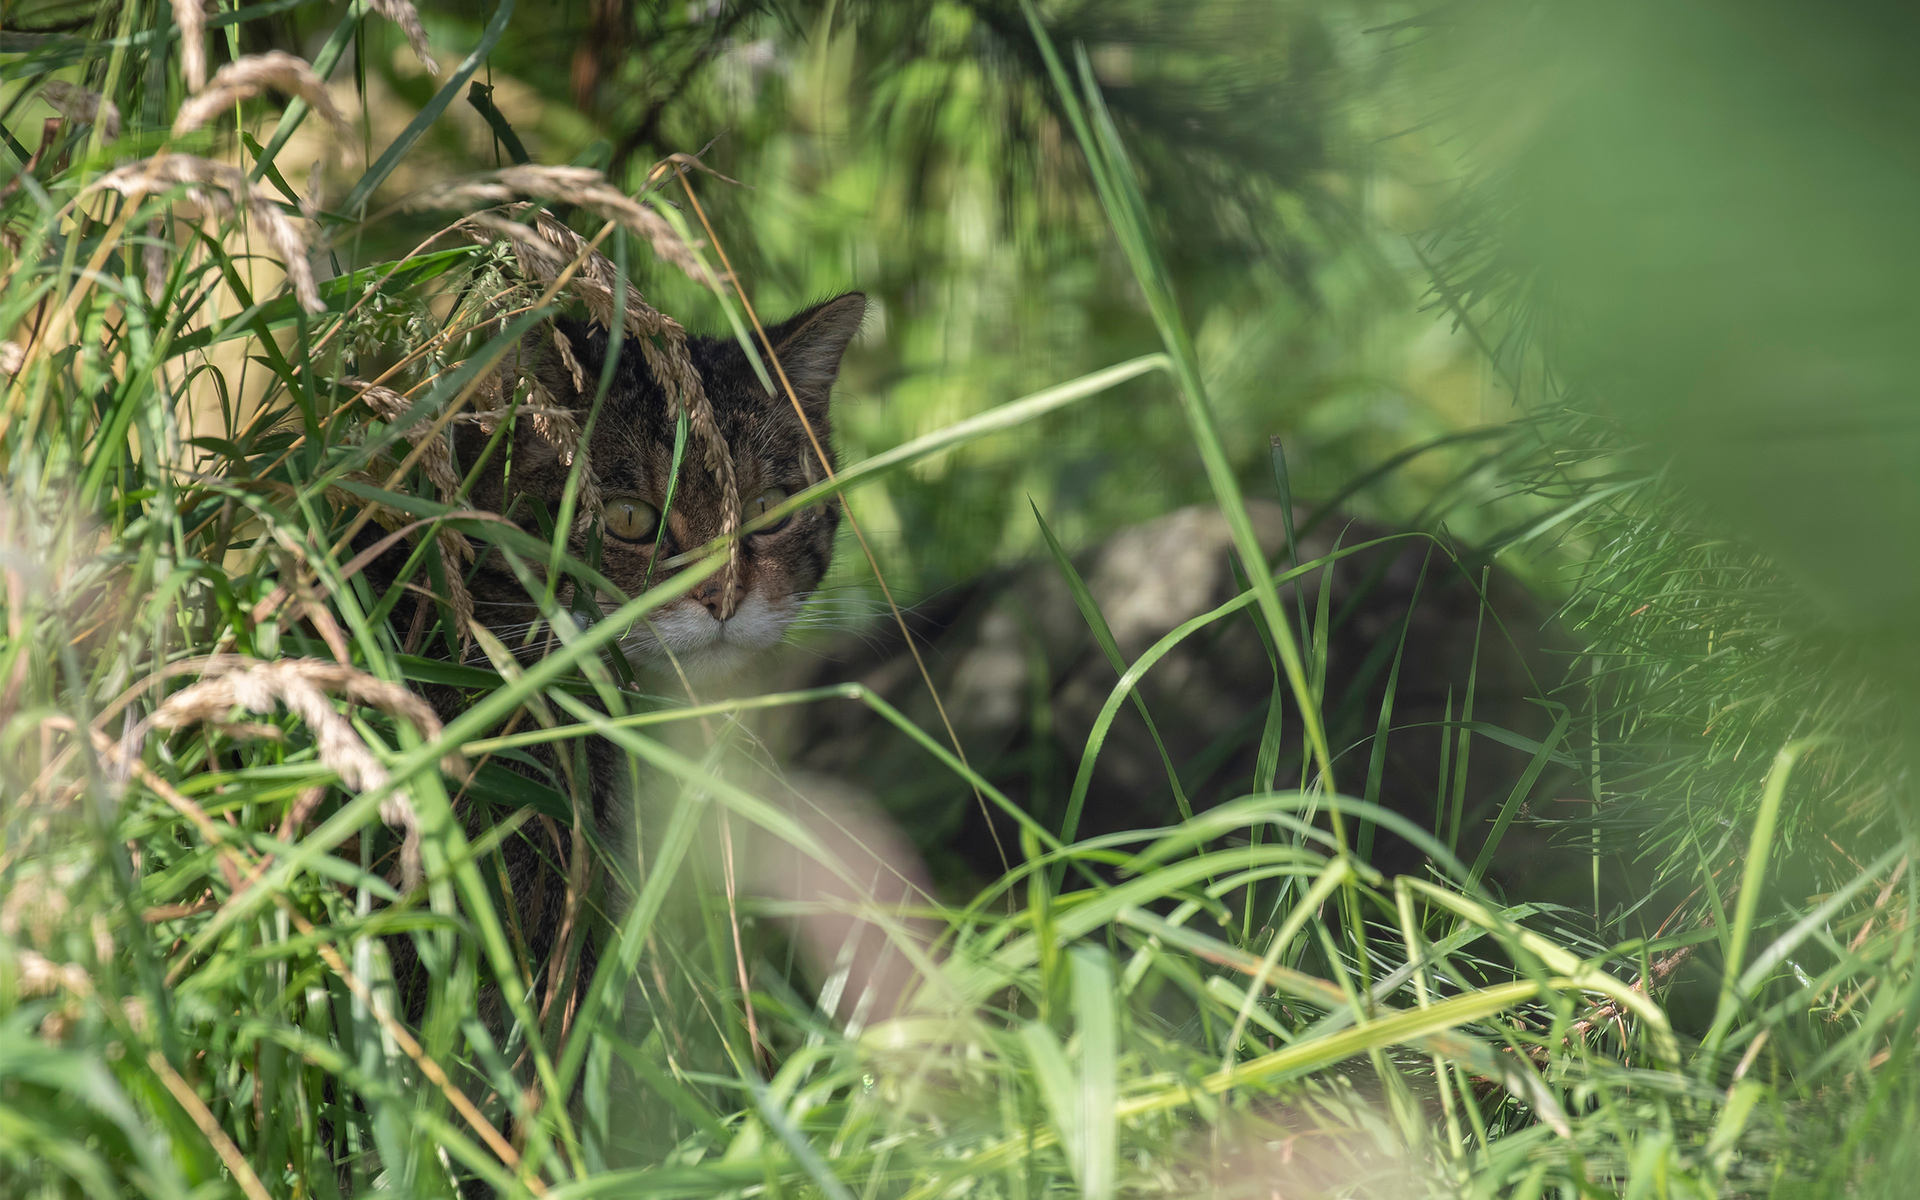 Scottish wildcat hiding in grass